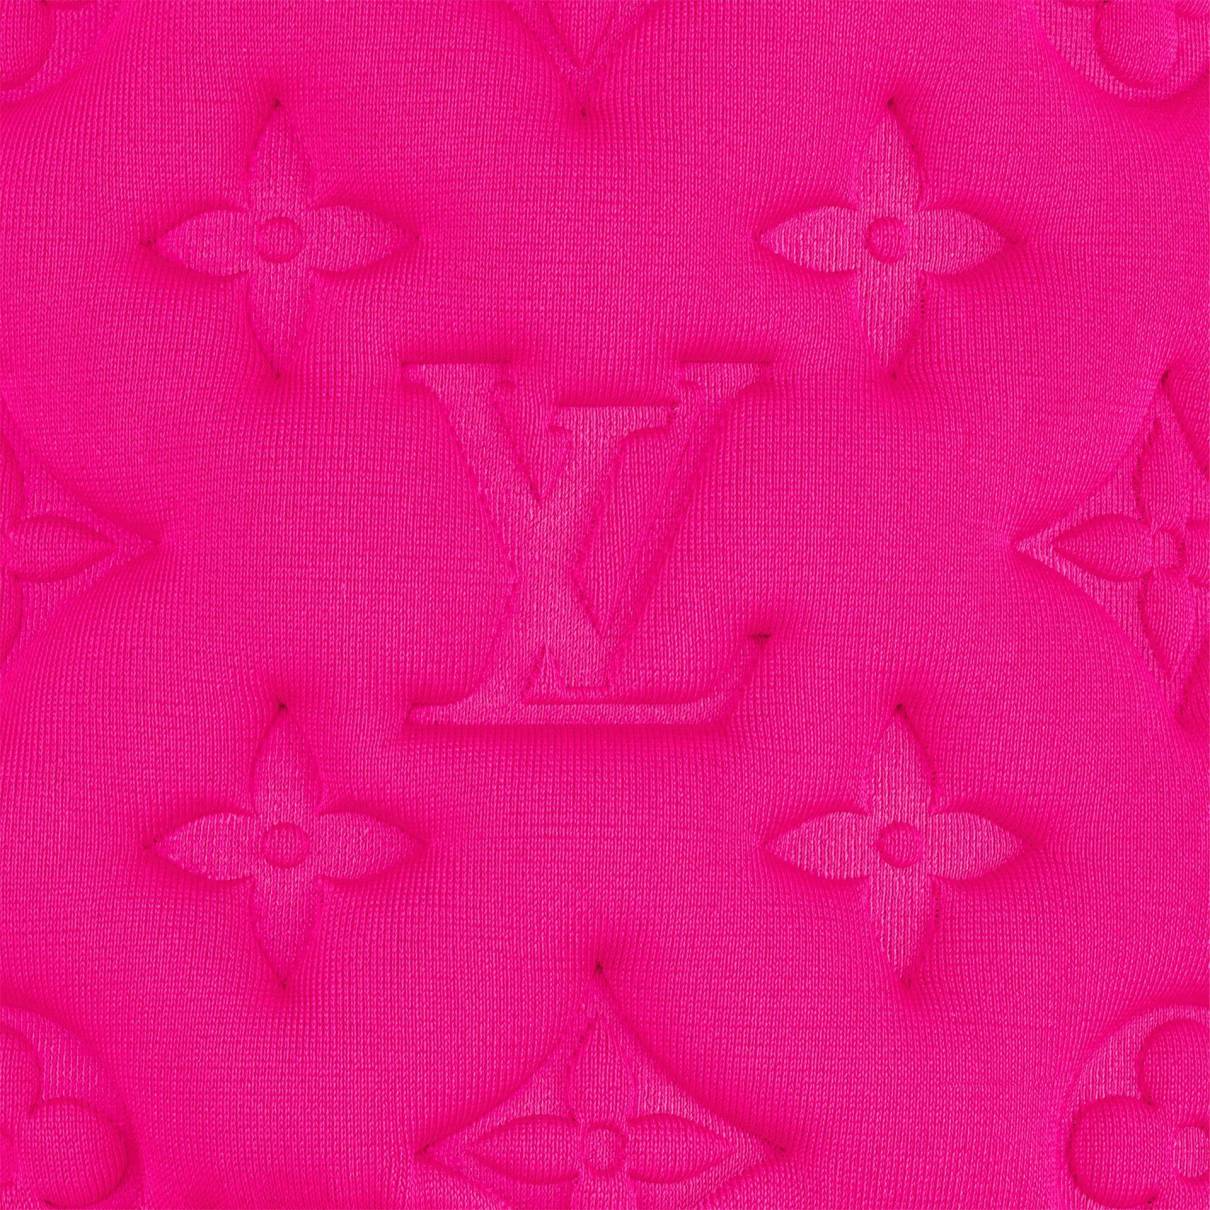 Pink Louis Vuitton In Maroon Background Louis Vuitton, HD